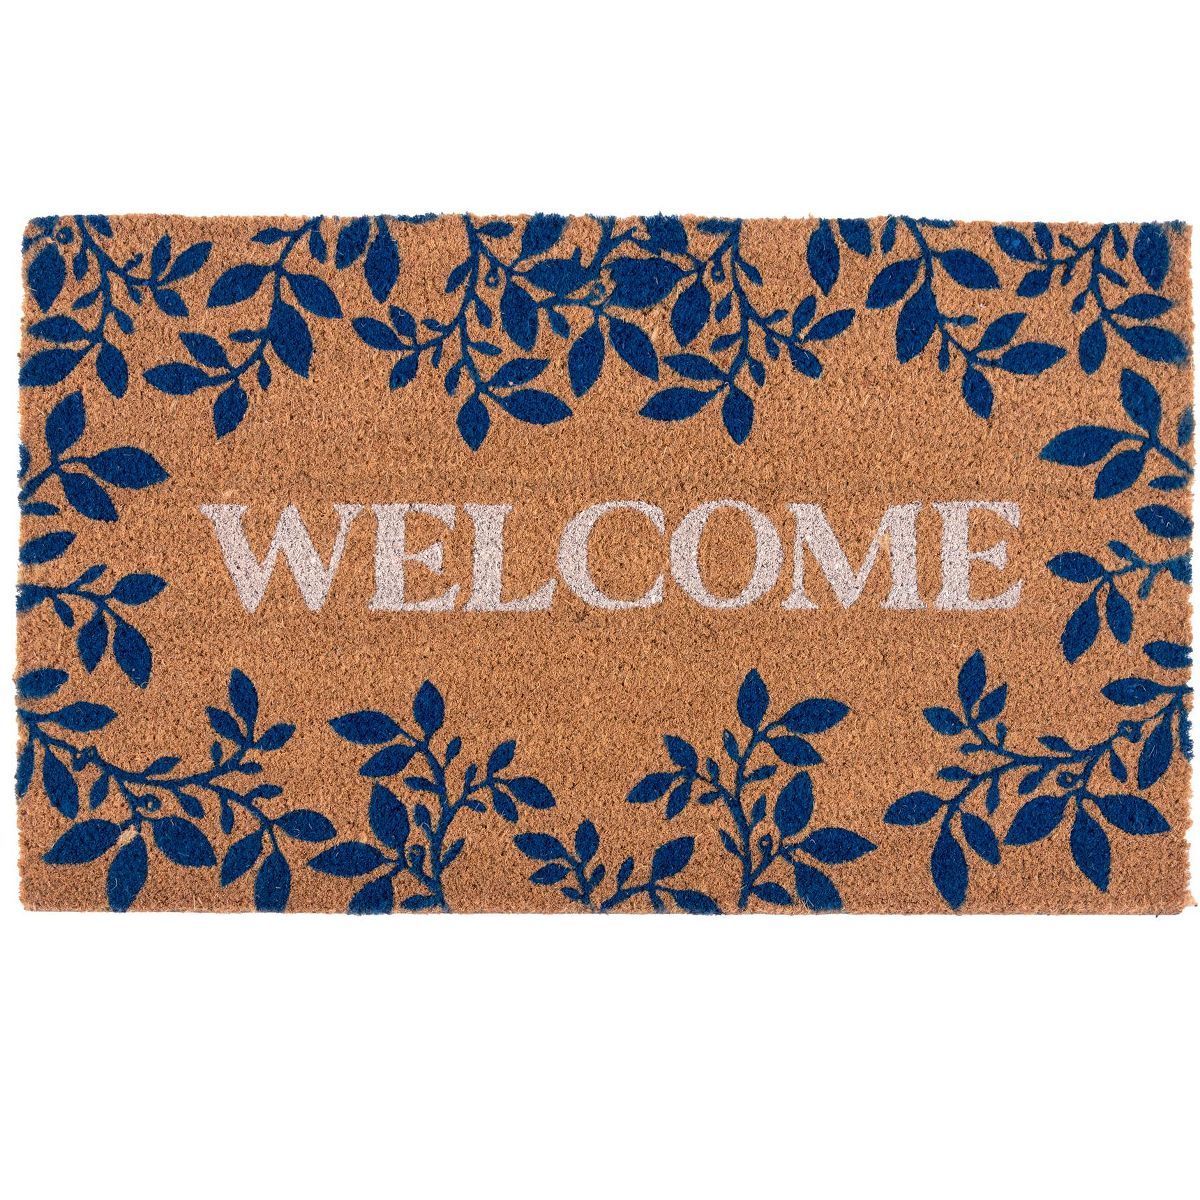 Shiraleah "Welcome" Blue Floral Doormat | Target